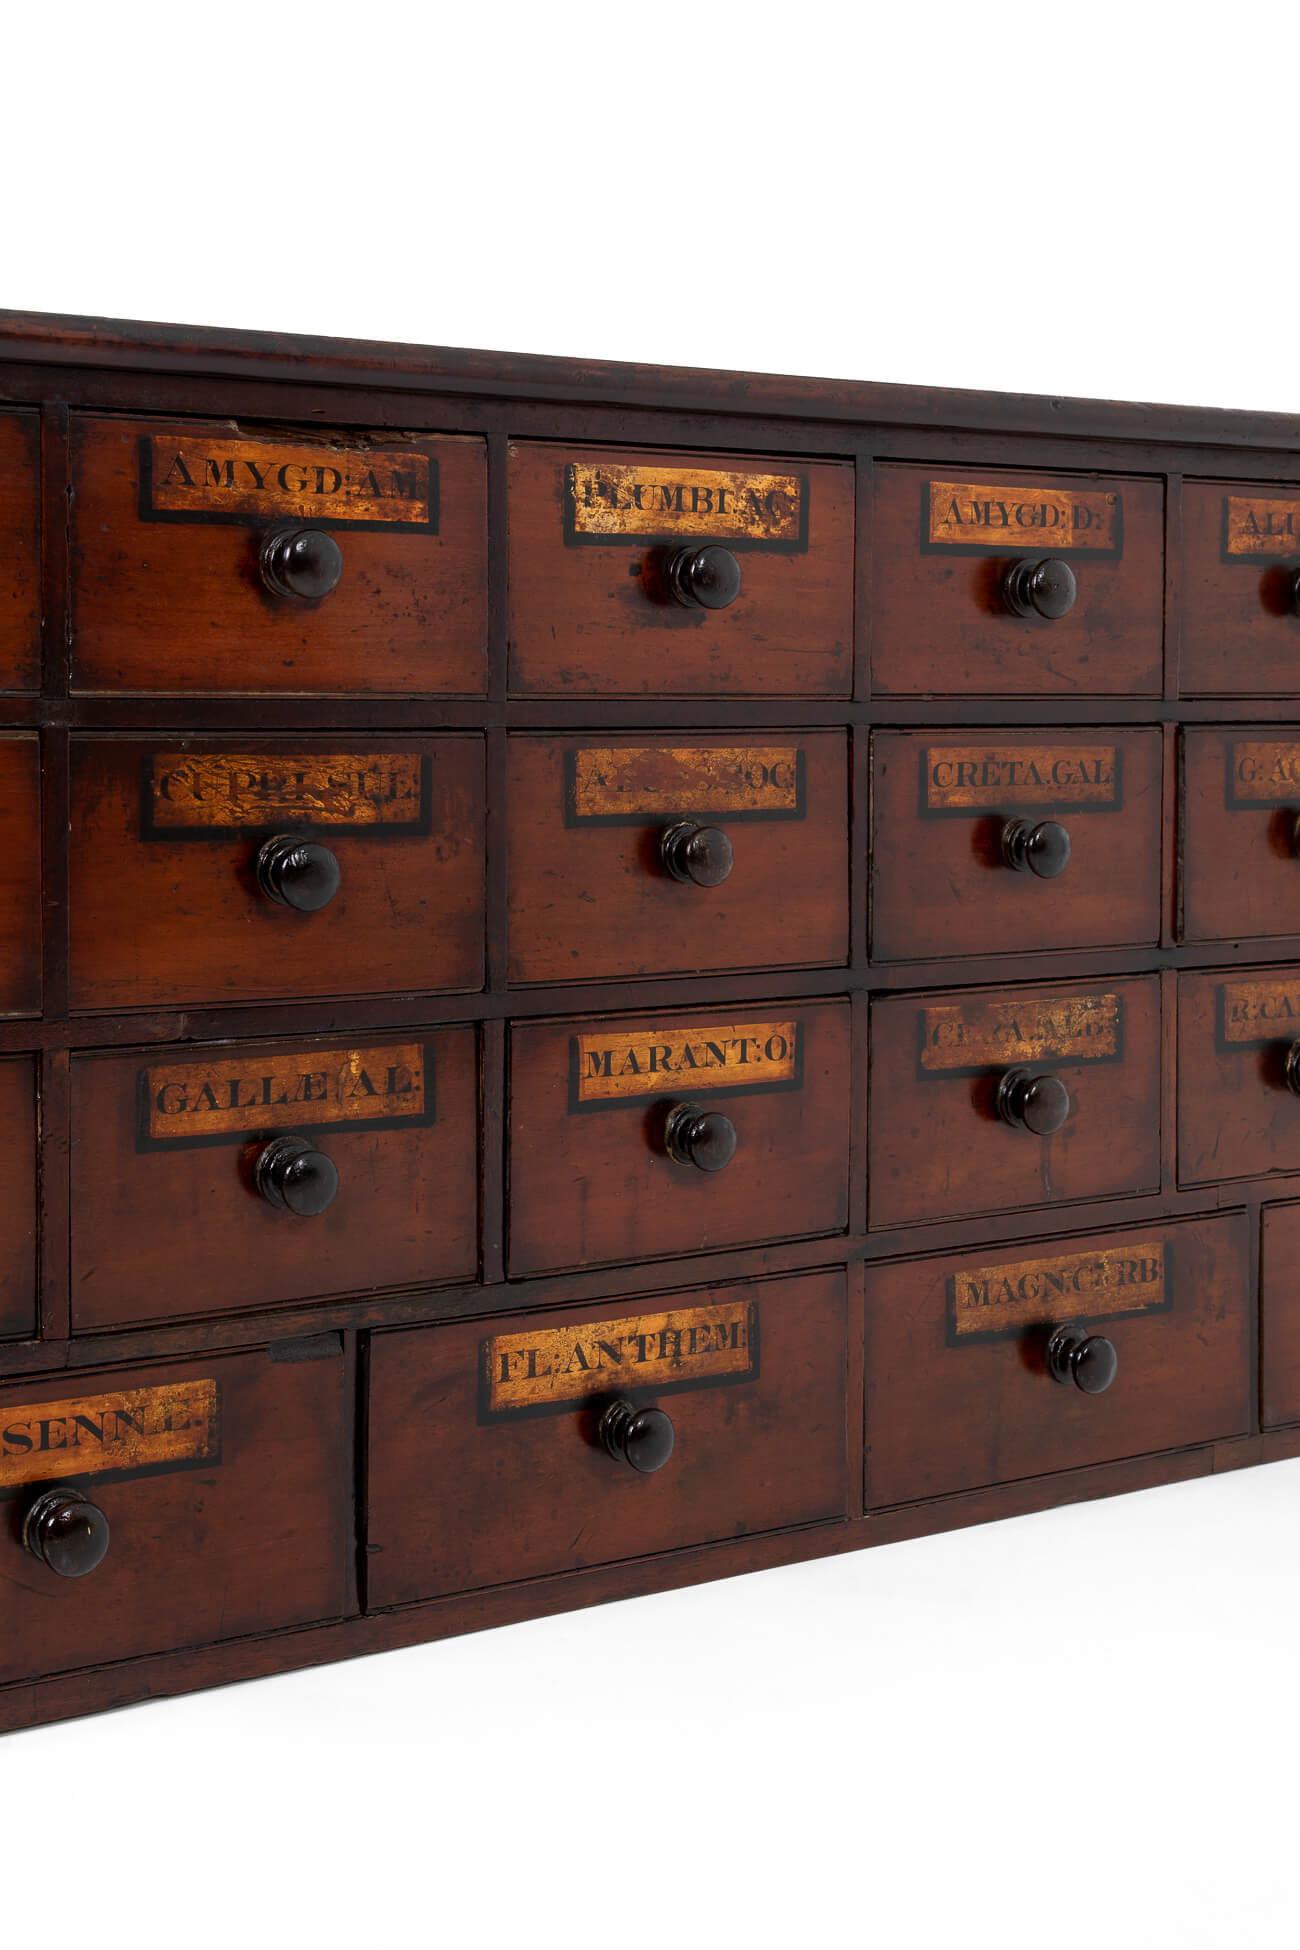 original chemist drawers